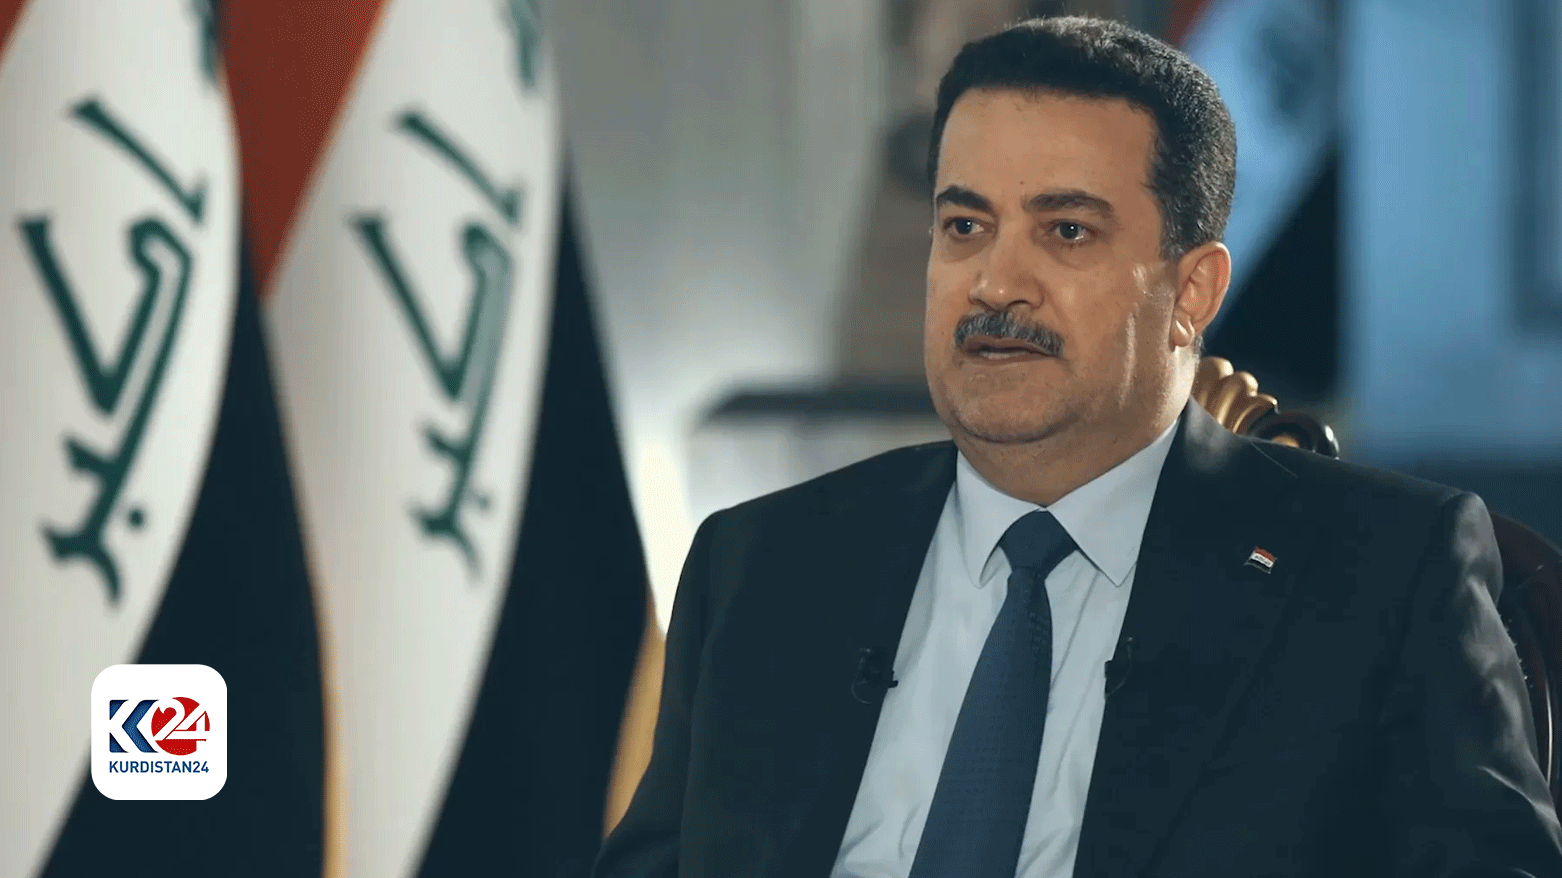 Iraqi Prime Minister reveals meeting agenda in Washington ahead of departure